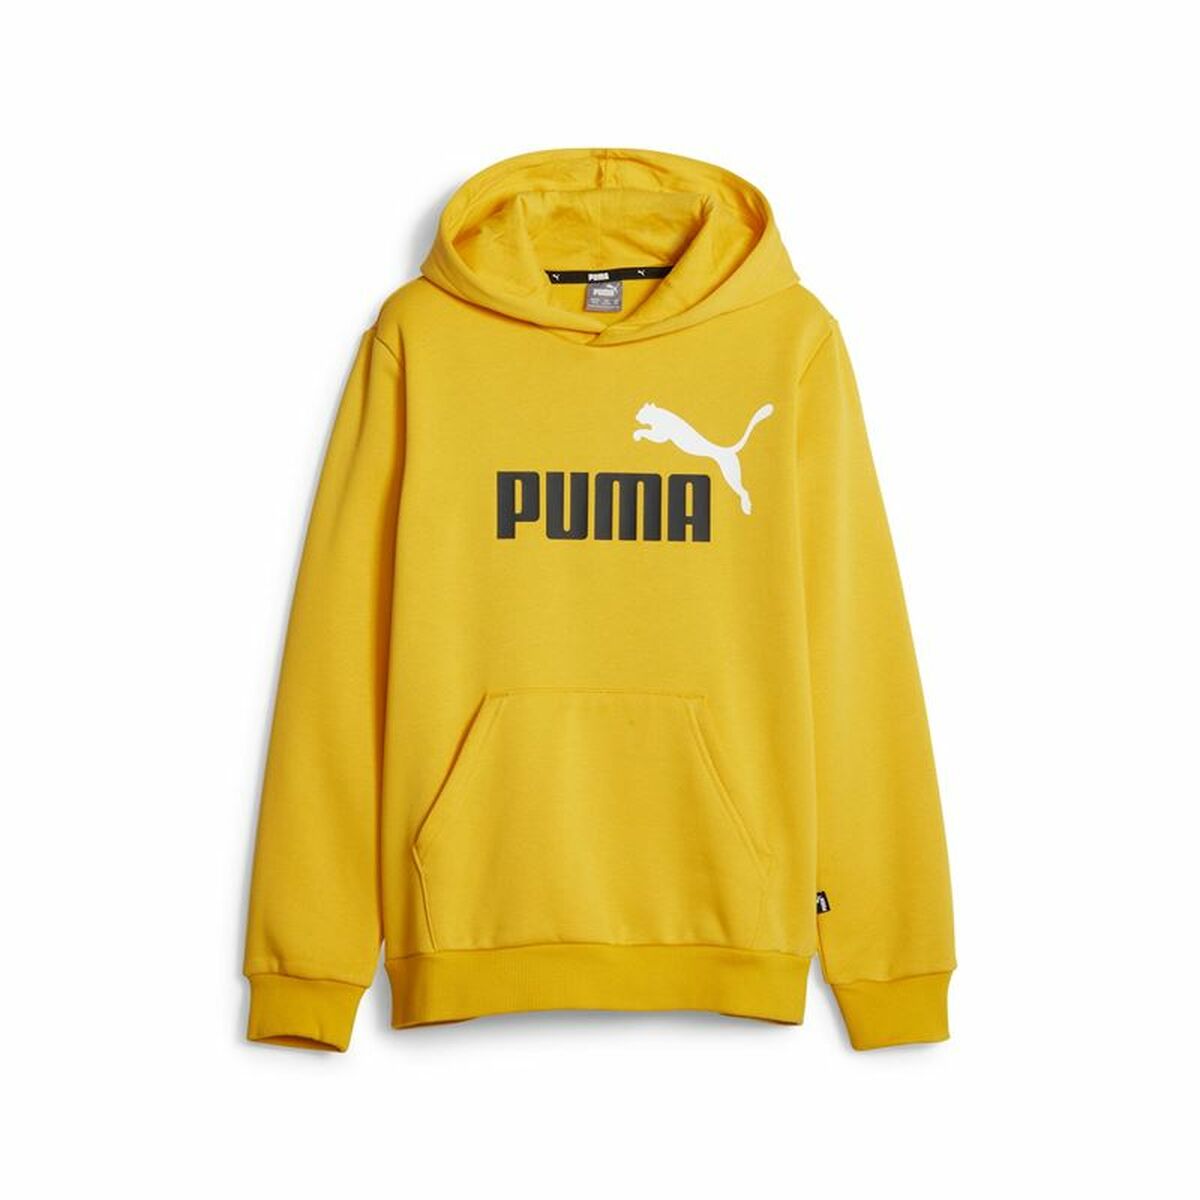 Kaufe Kinder-Sweatshirt Puma Ess+ 2 Col Big Logo Gelb bei AWK Flagship um € 54.00